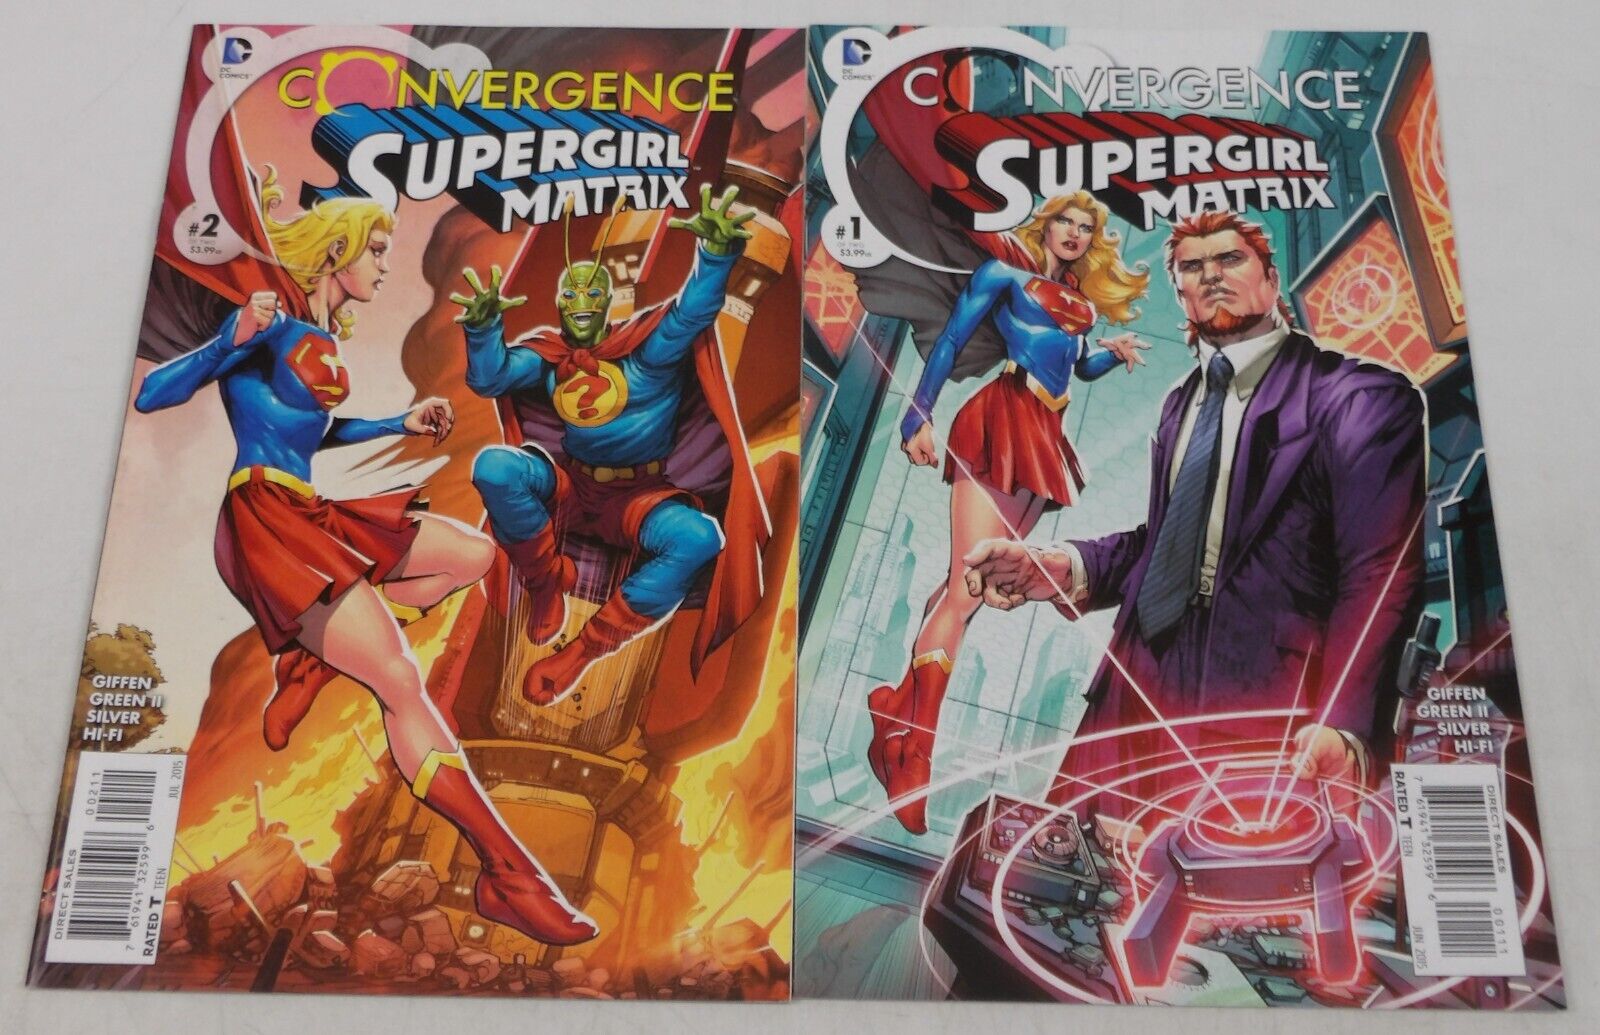 Convergence Supergirl: Matrix #1-2 VF/NM complete series Ambush Bug Keith Giffen